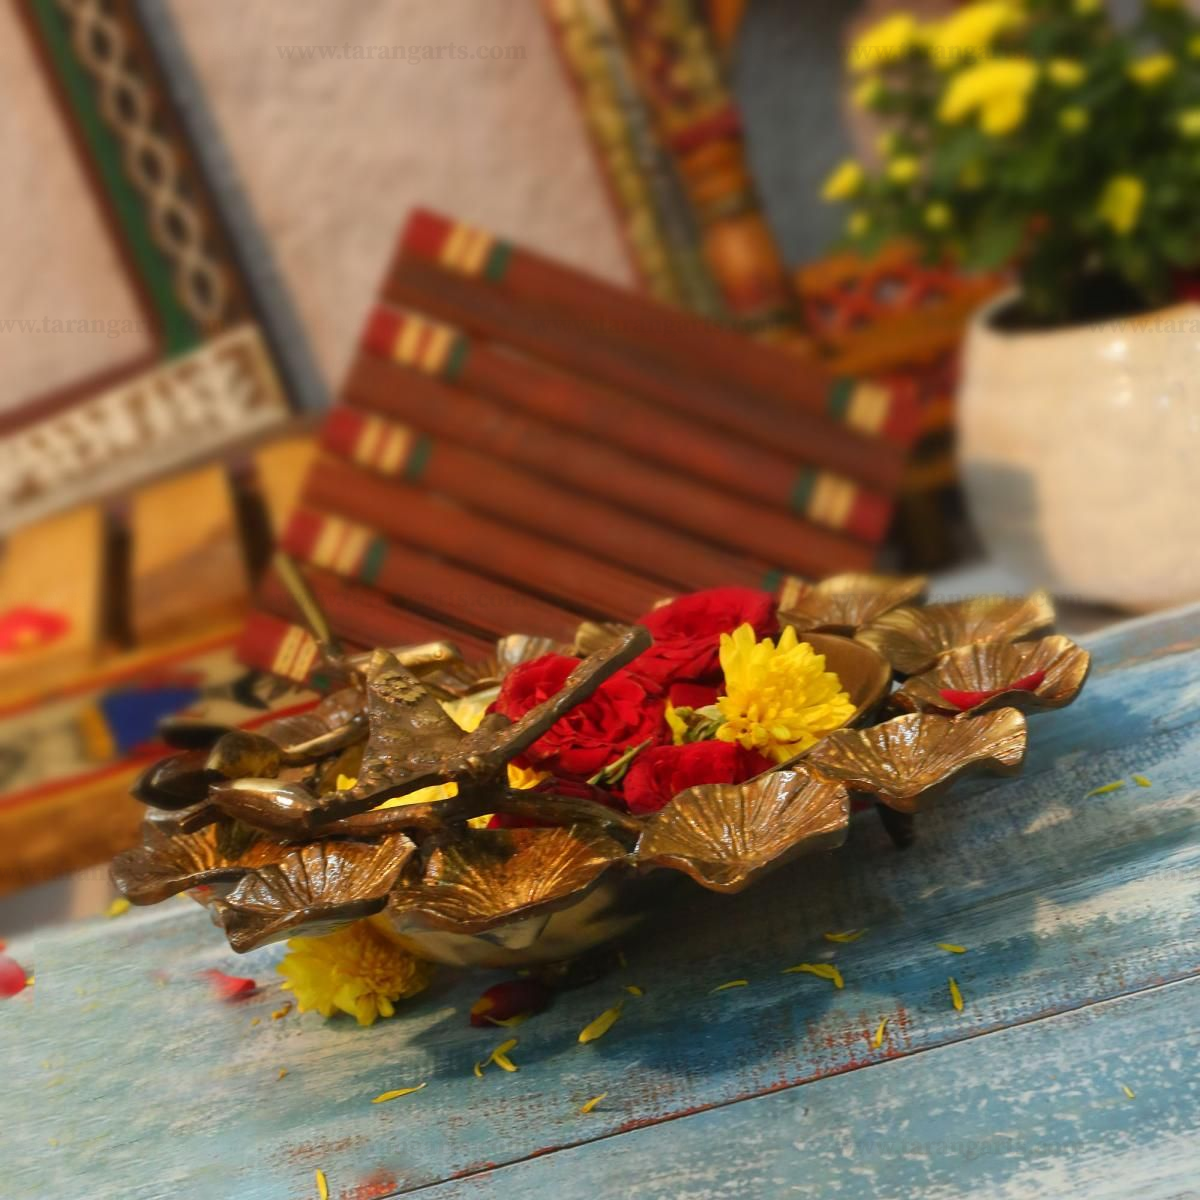 Buy Indian Brass Decor Online, Indian Handicrafts Online